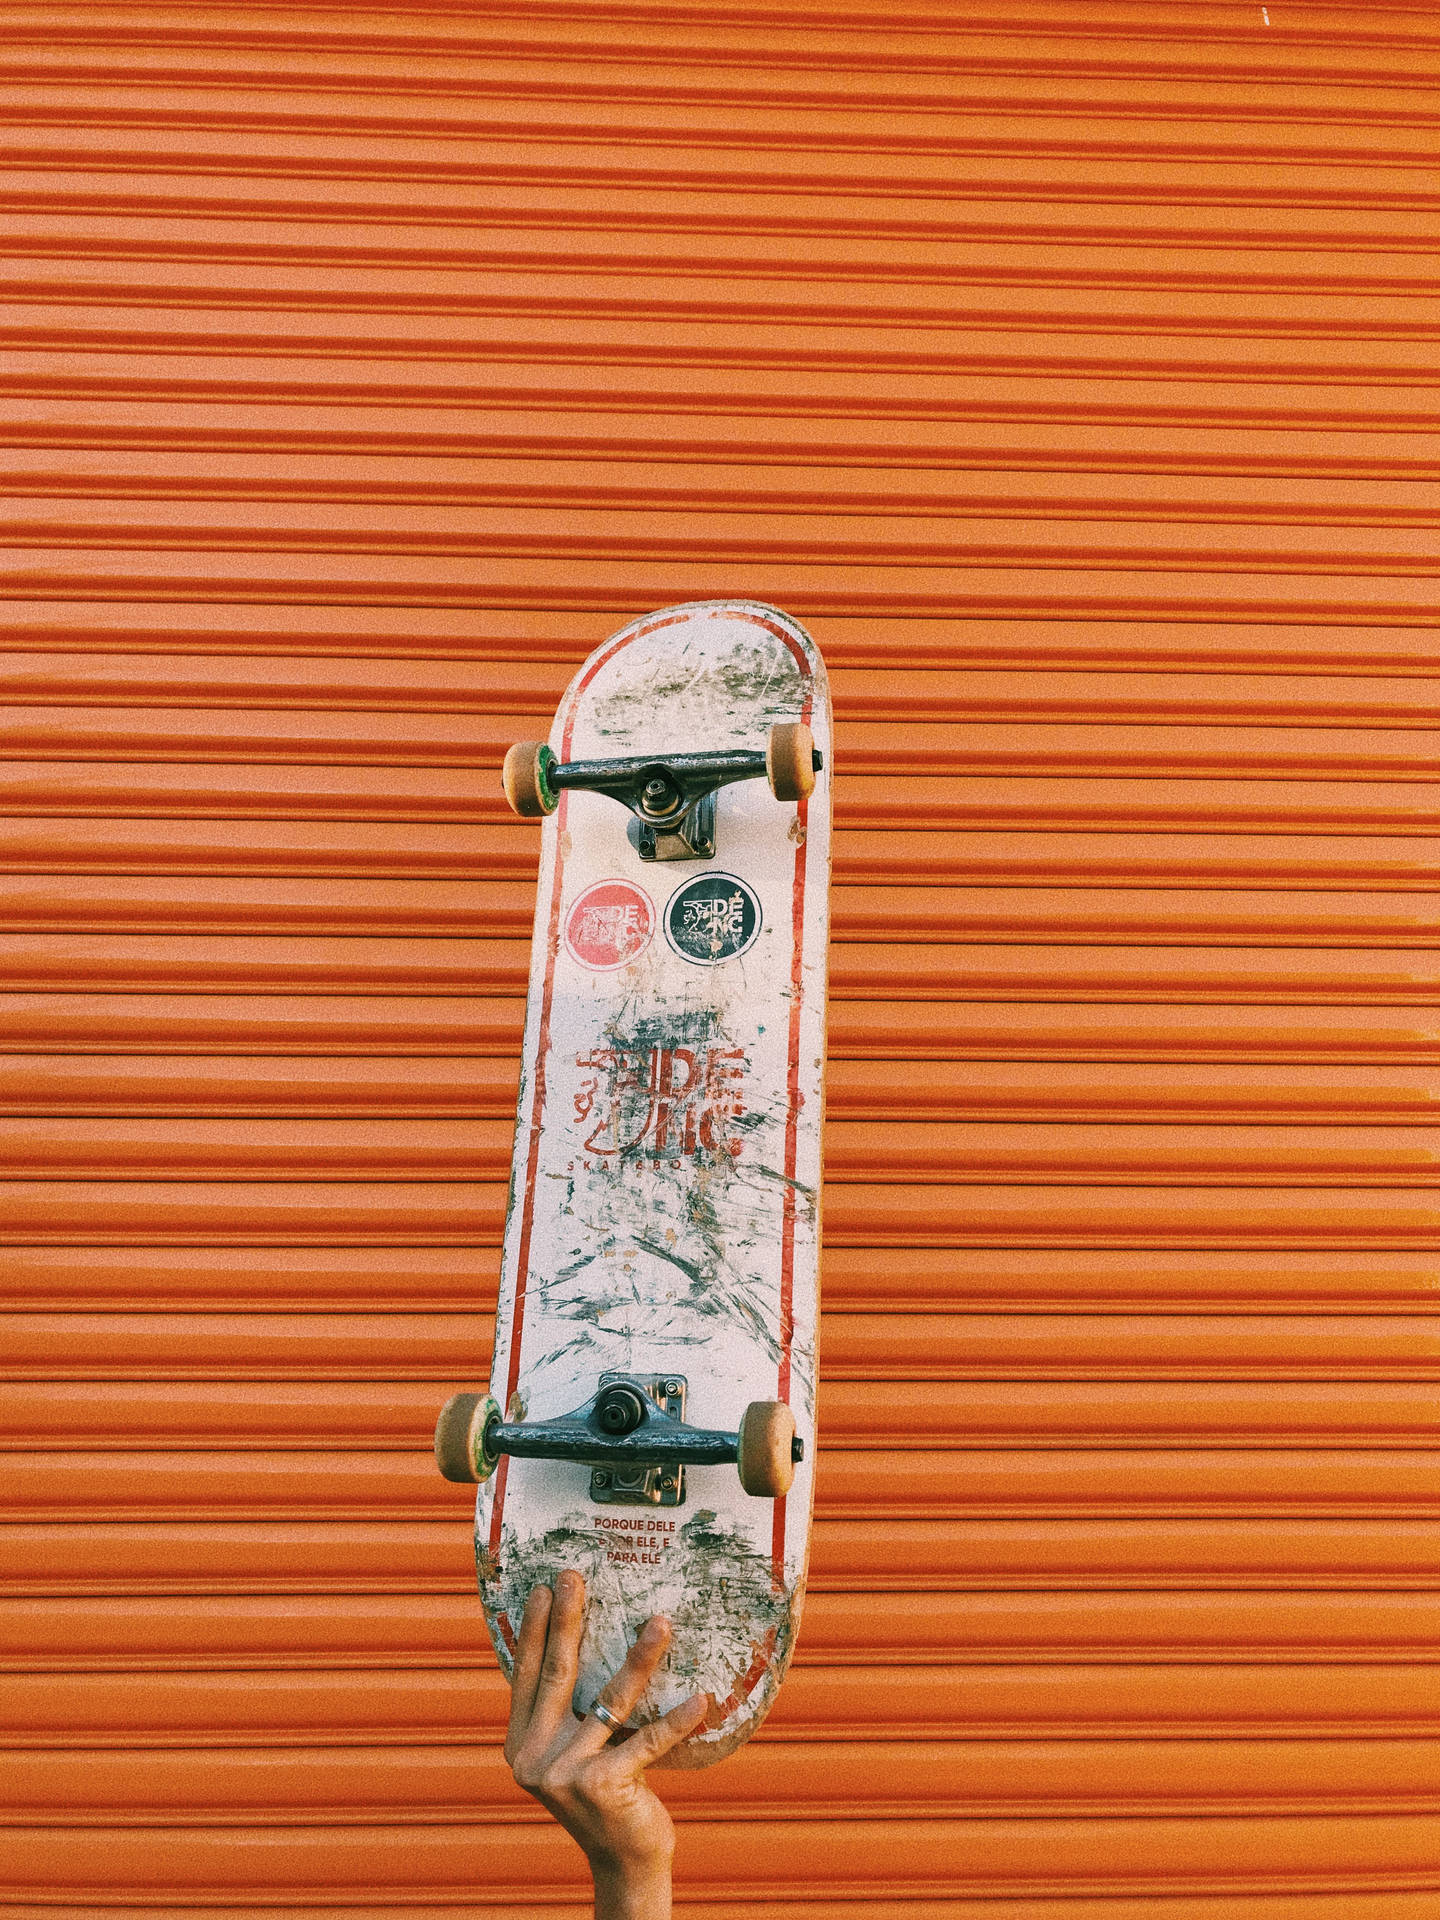 Skateboard In Orange Gate Background Wallpaper